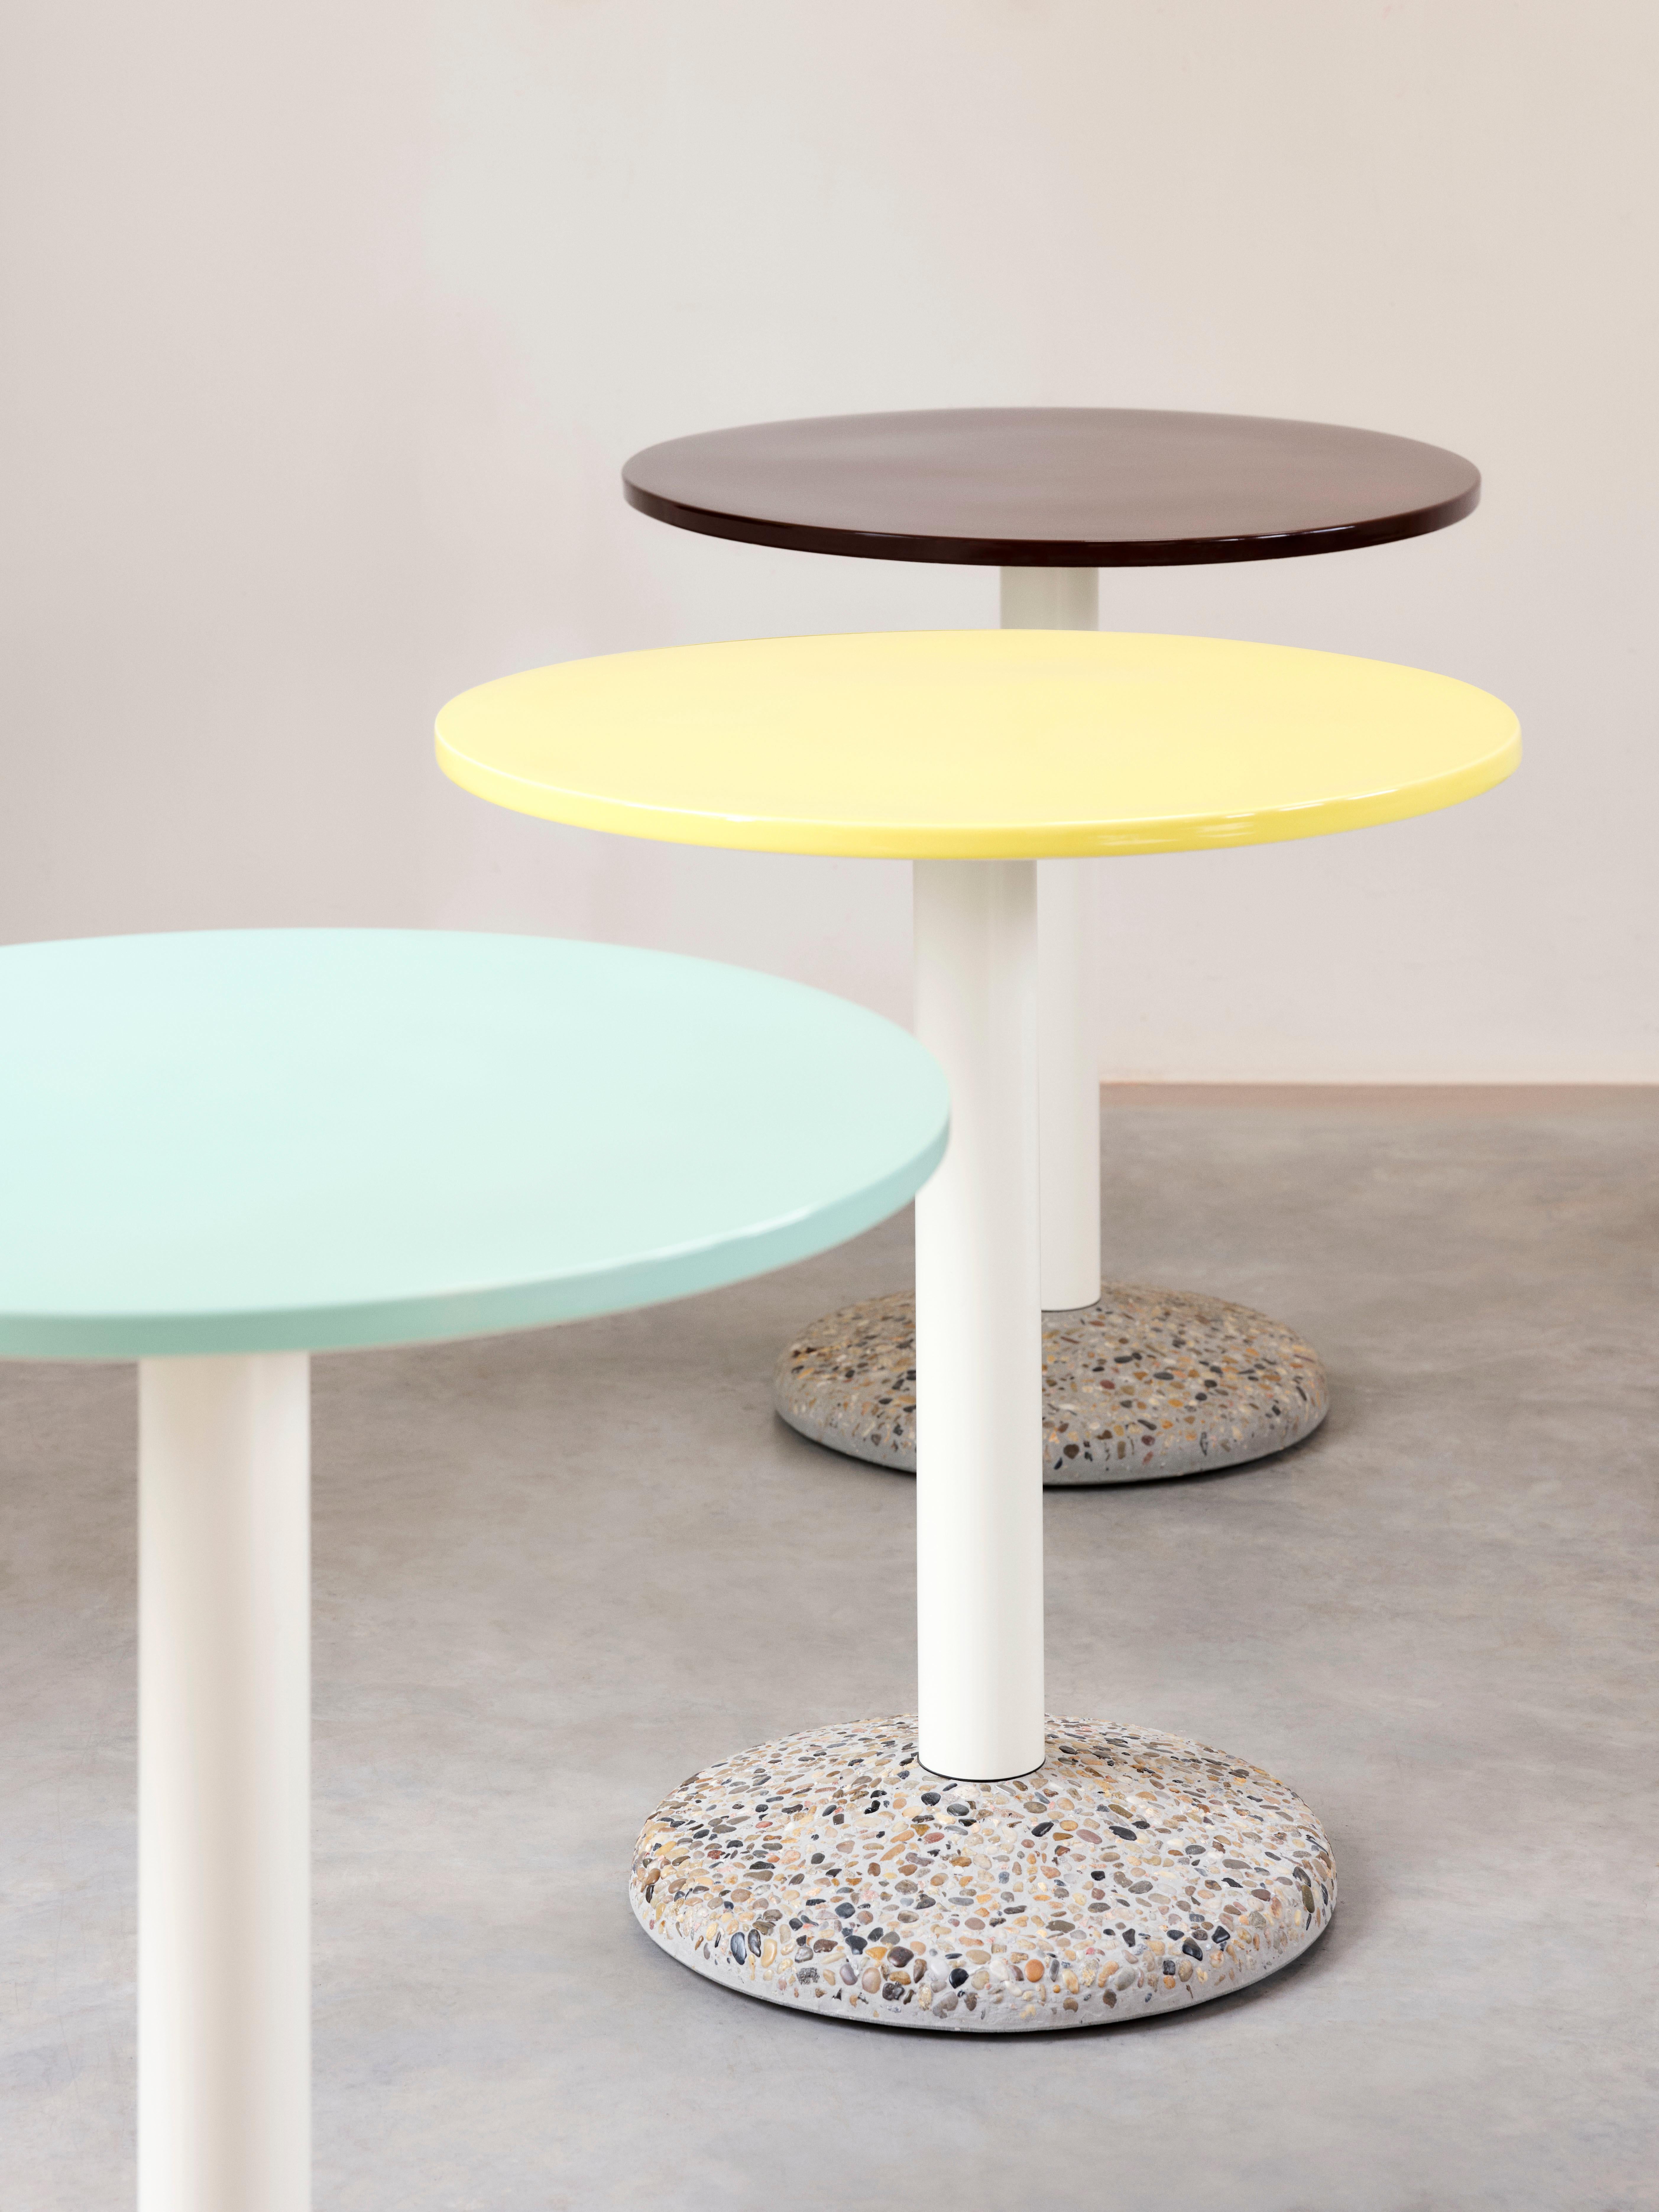 Danish Ceramic Table Ø70, Outdoor-Bright Yellow Porcelain-by Muller Van Severen for Hay For Sale